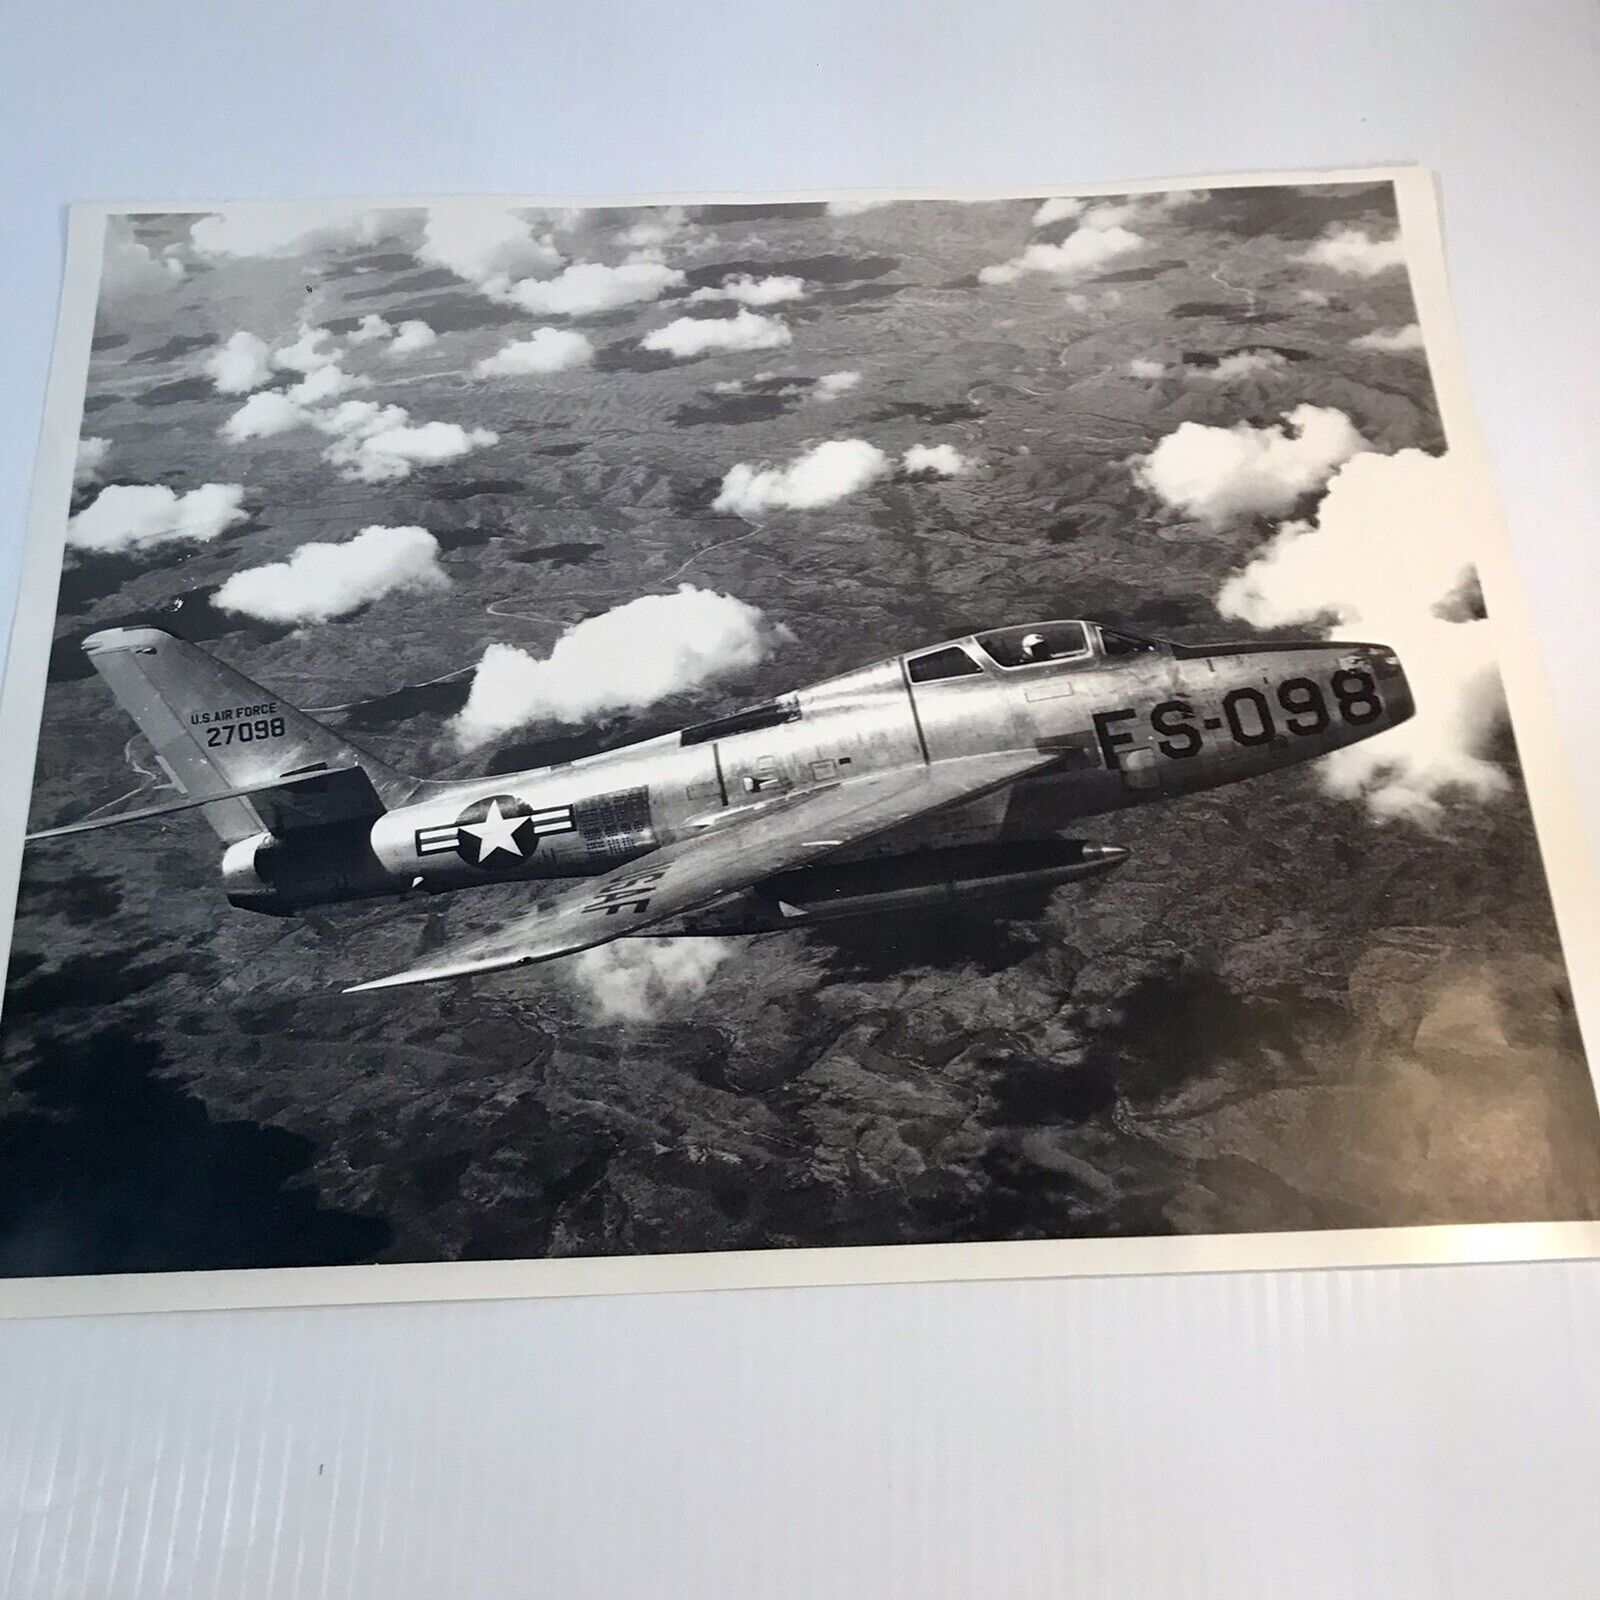 Vintage Military USAF Airplane Photo Print FS-098 Black & White 14x11